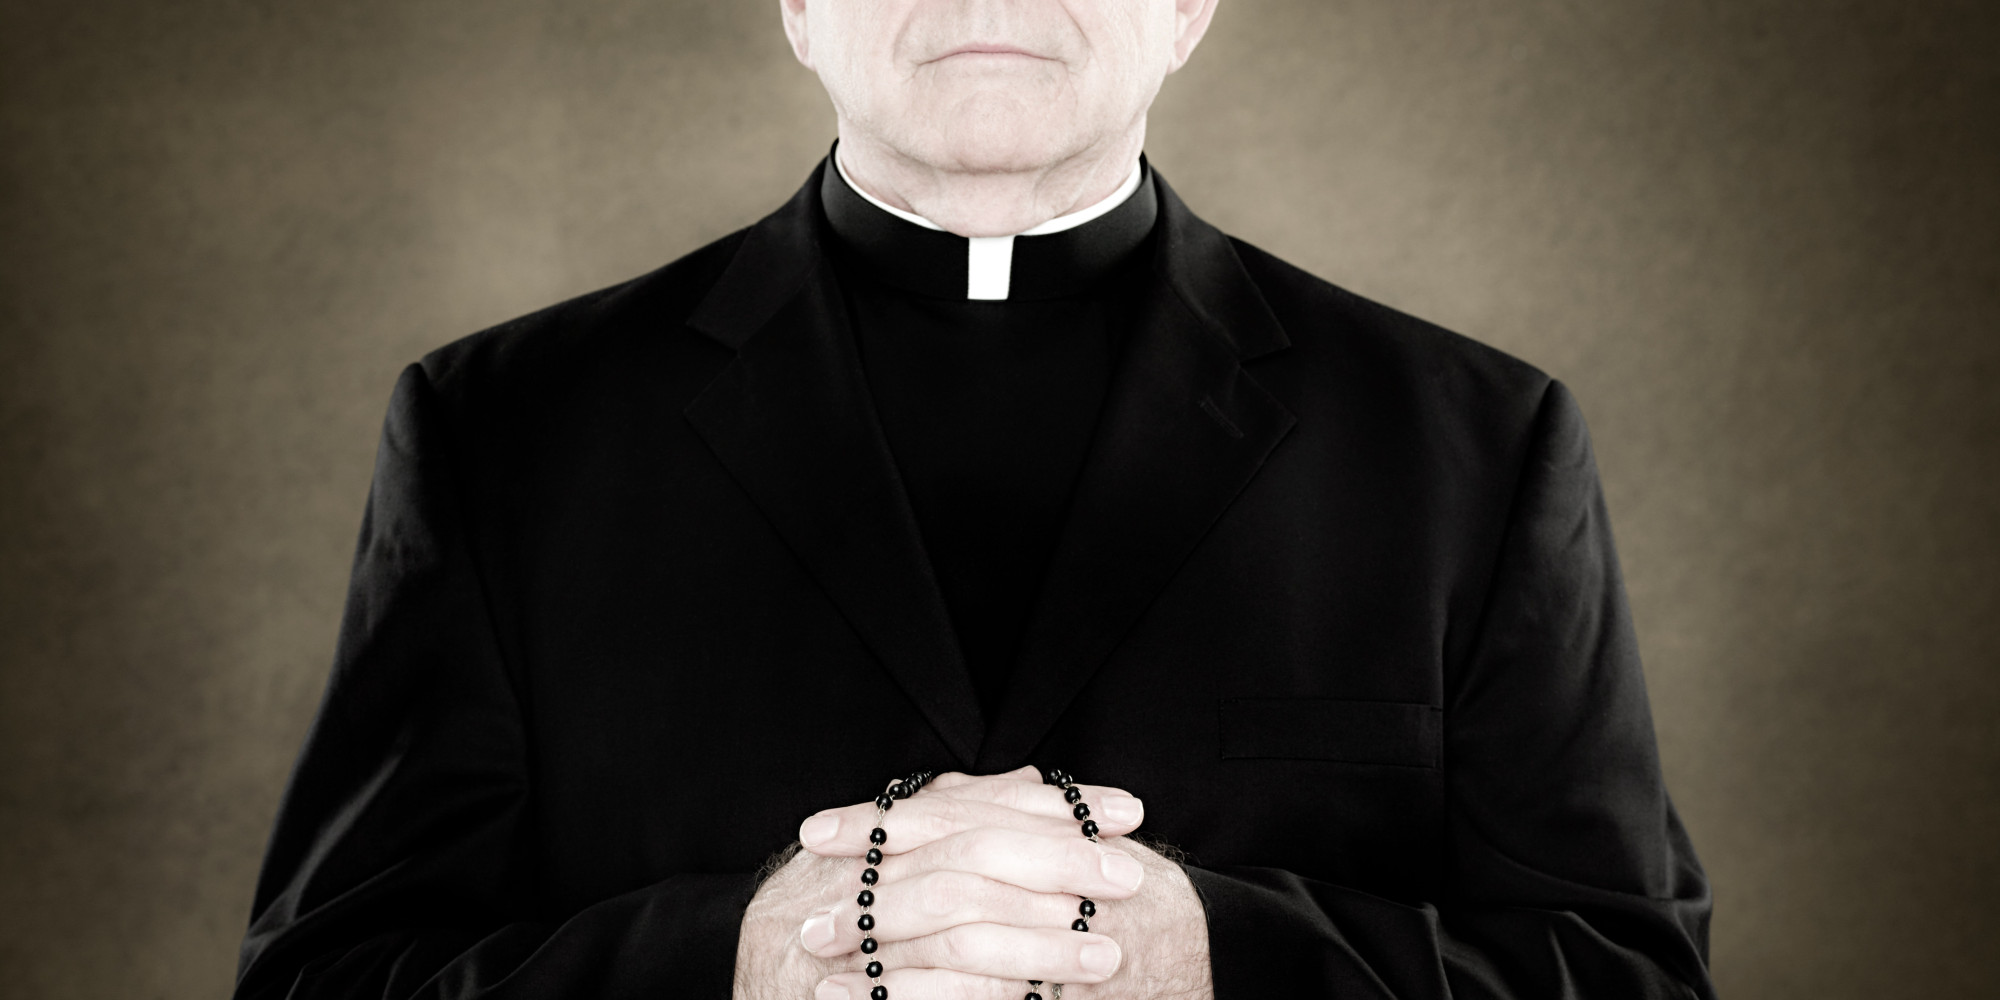 o CATHOLIC PRIEST